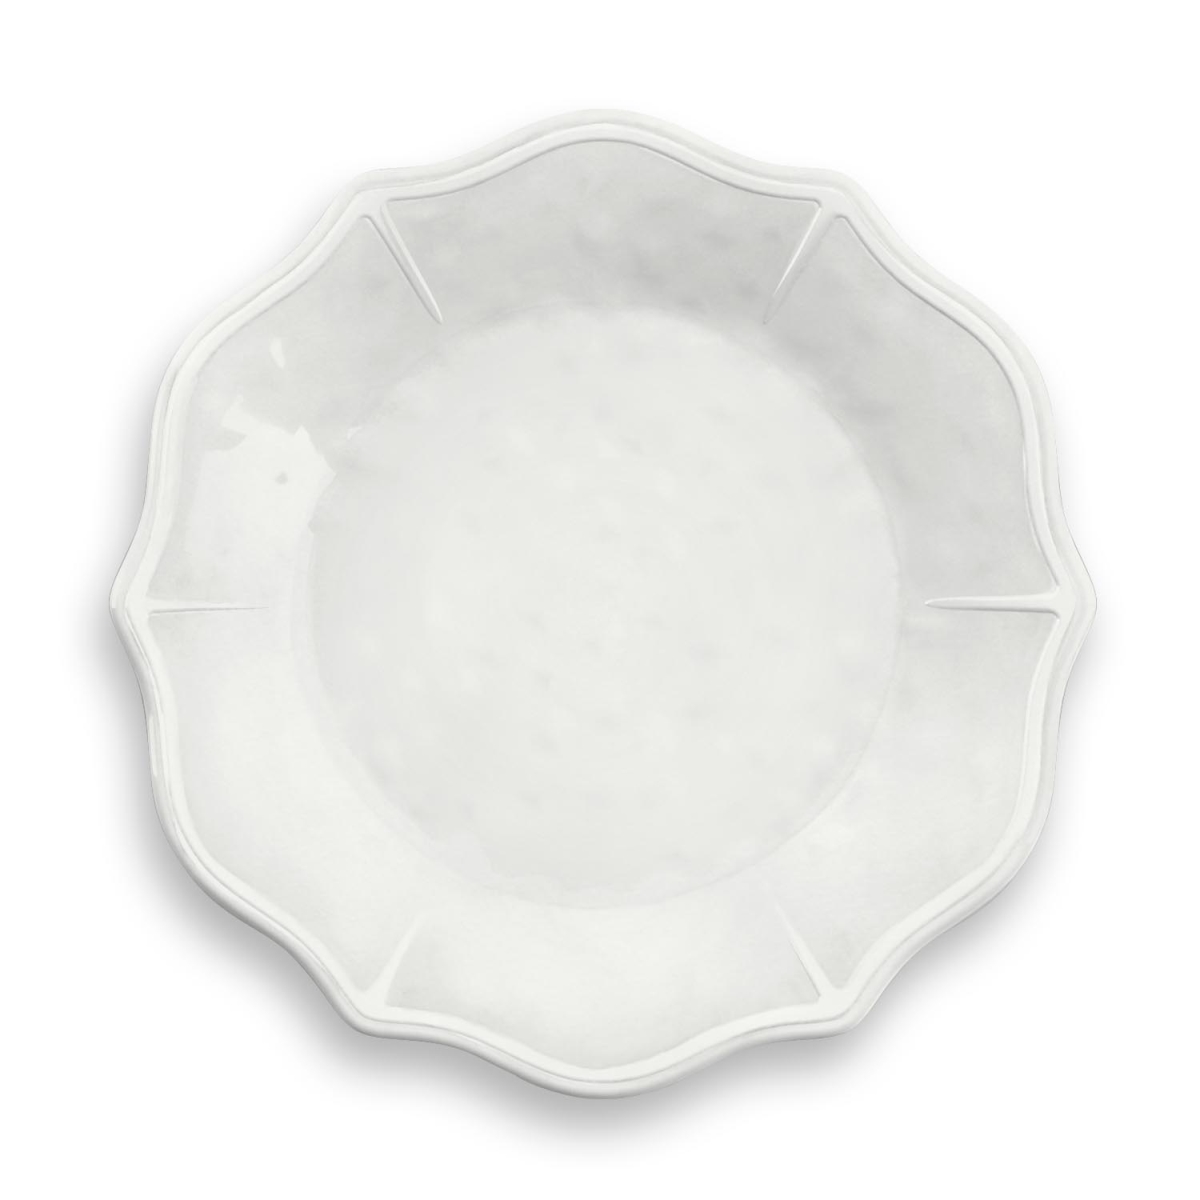 Pso8115assdw Savino Dinner Plate Heavy Mold, Set Of 6 - White